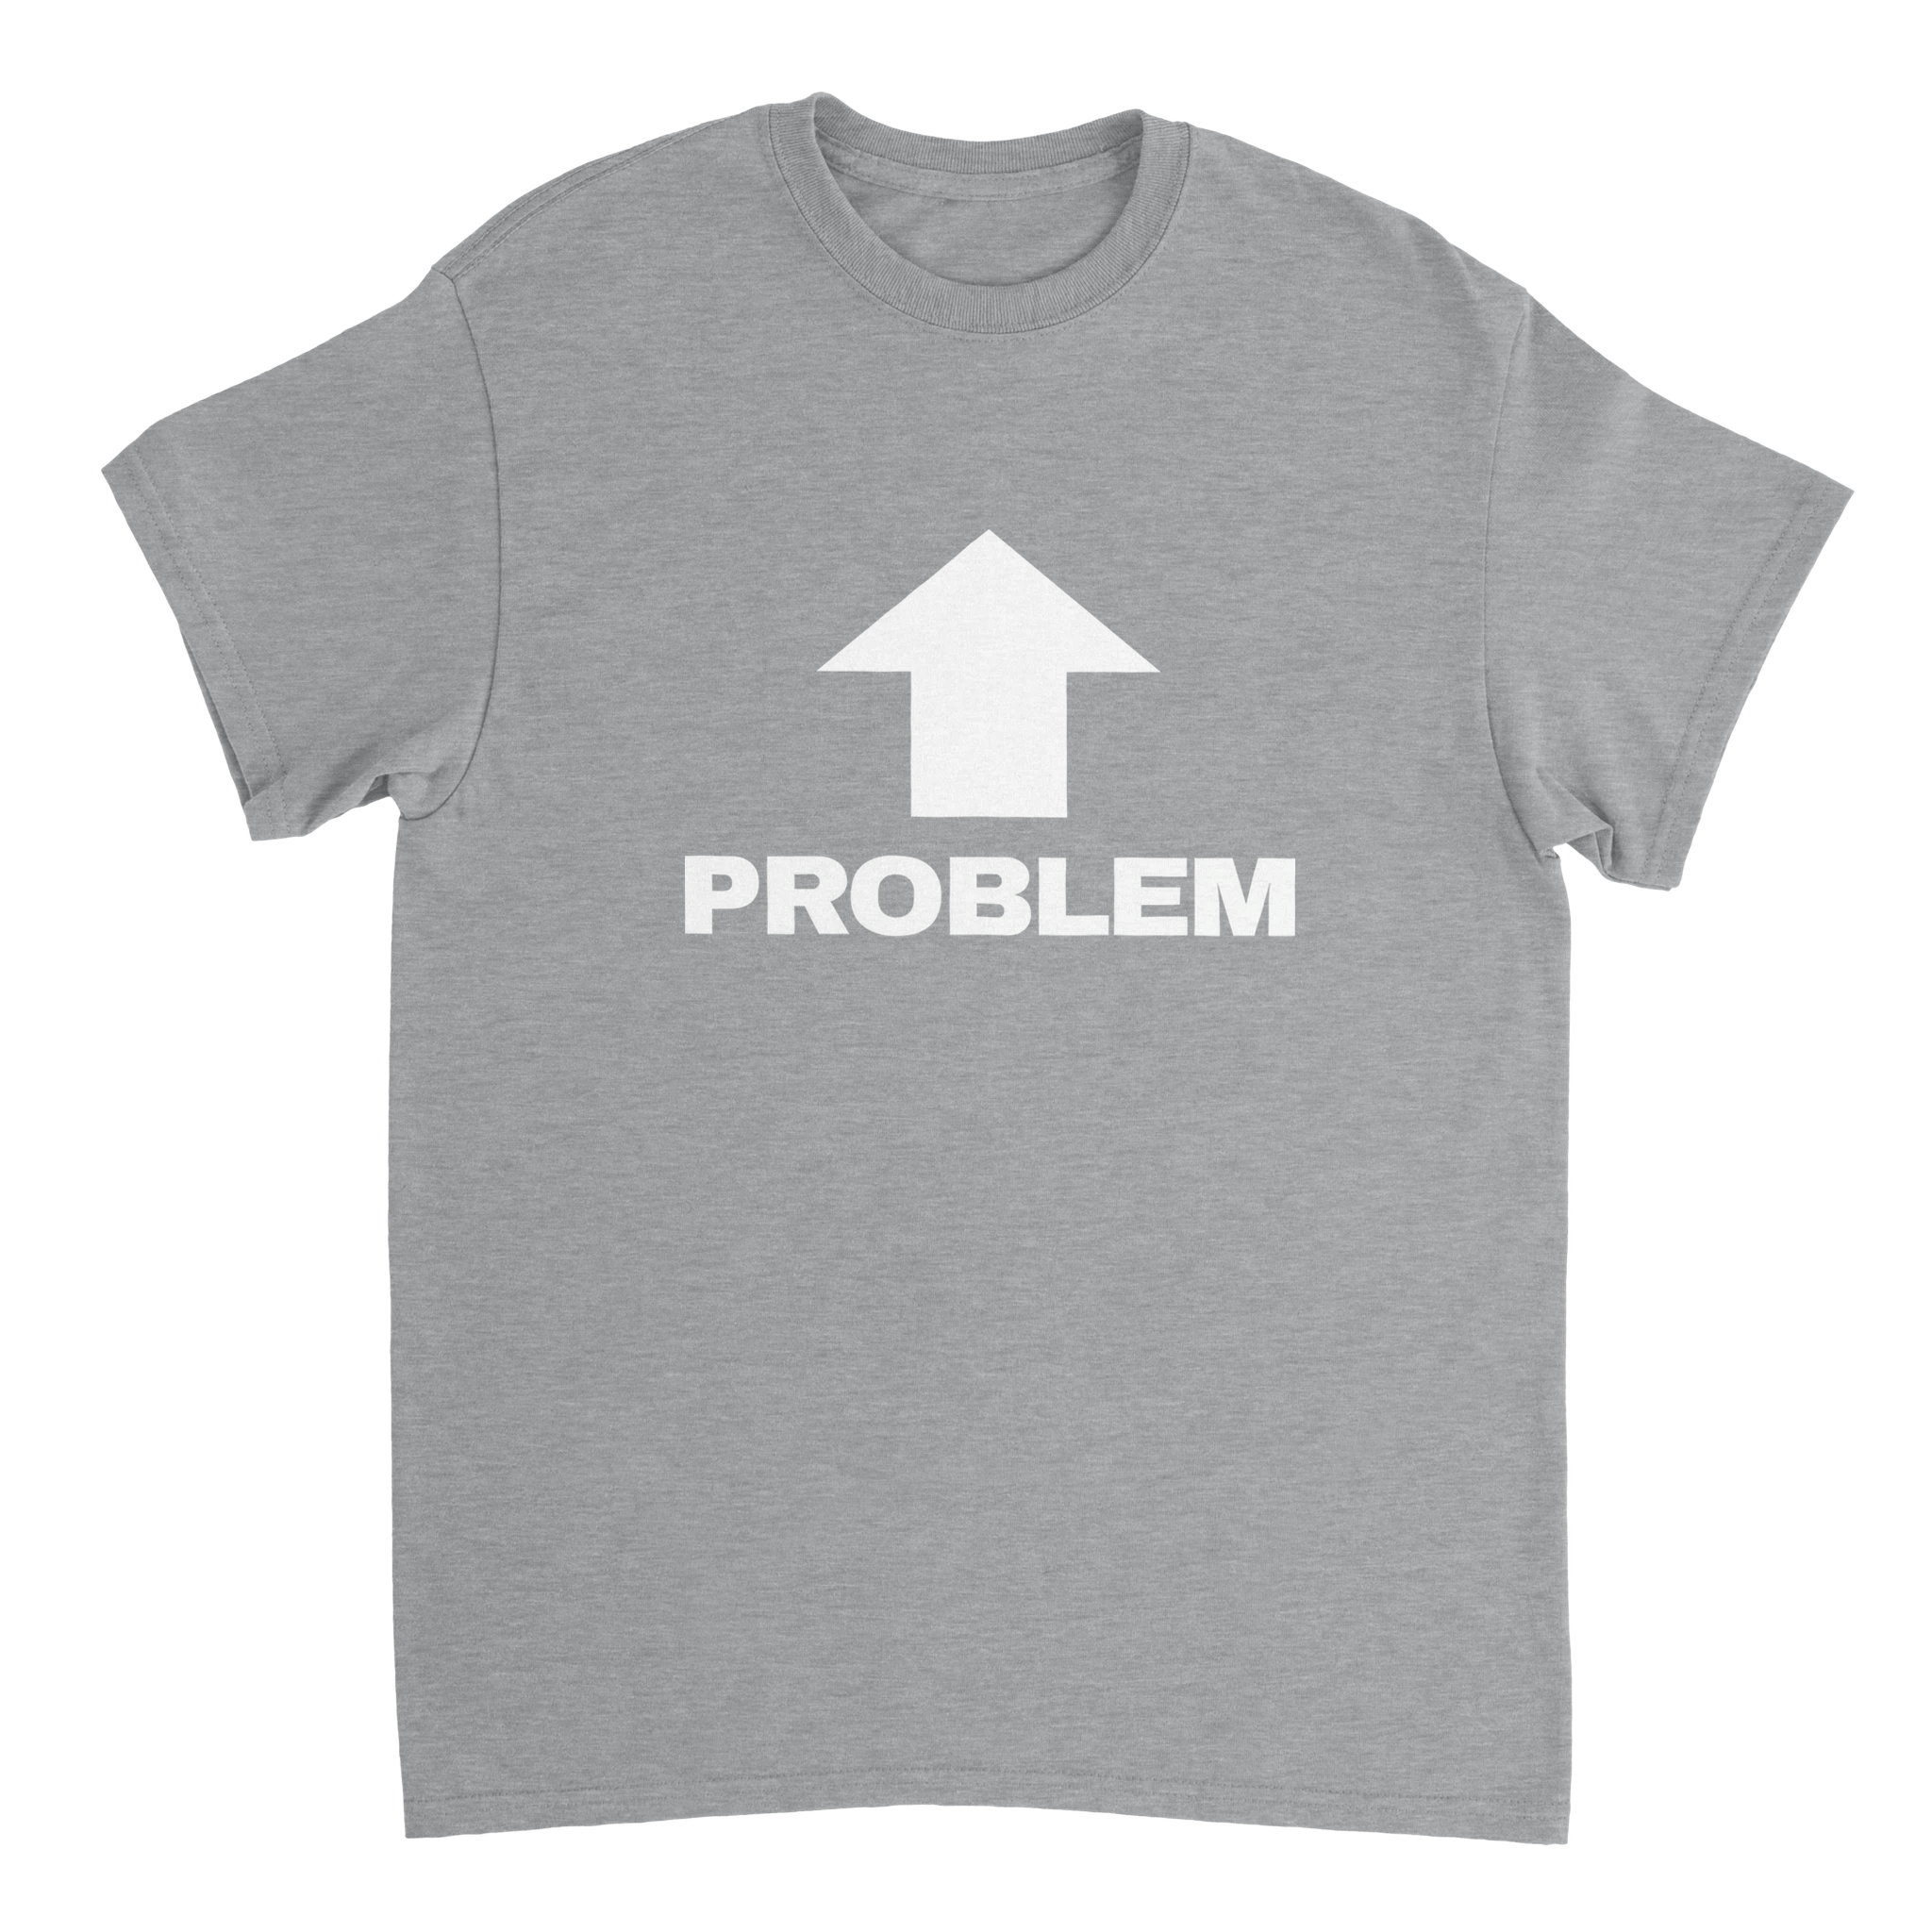 The Problem T-shirt